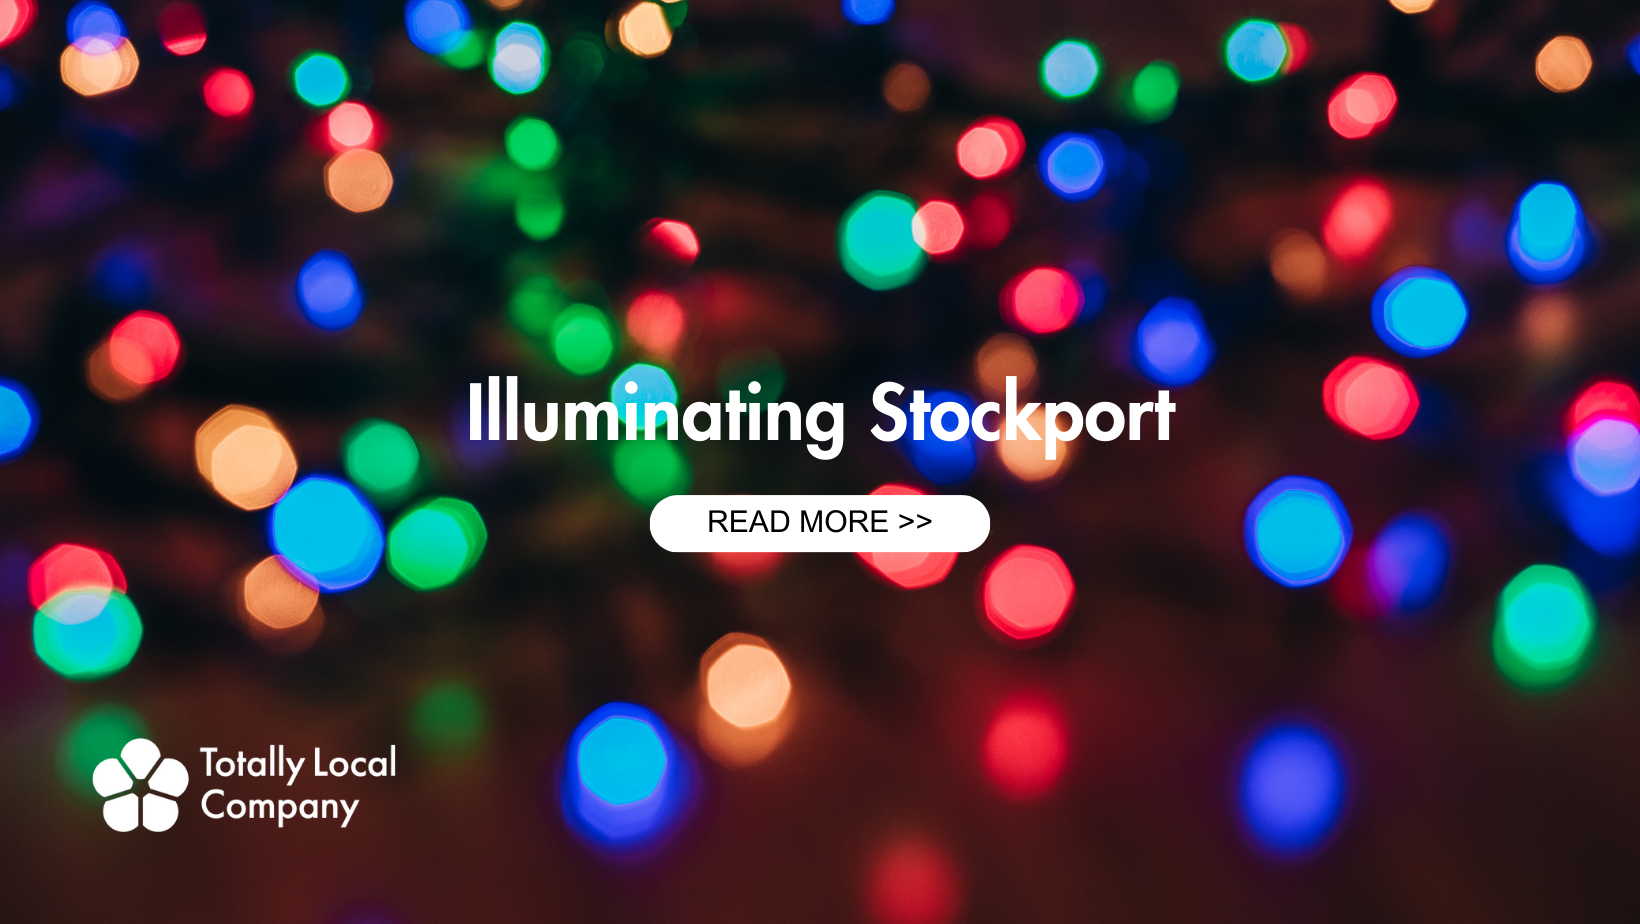 Illuminating Stockport: TLC Festive Project Brightens The Community